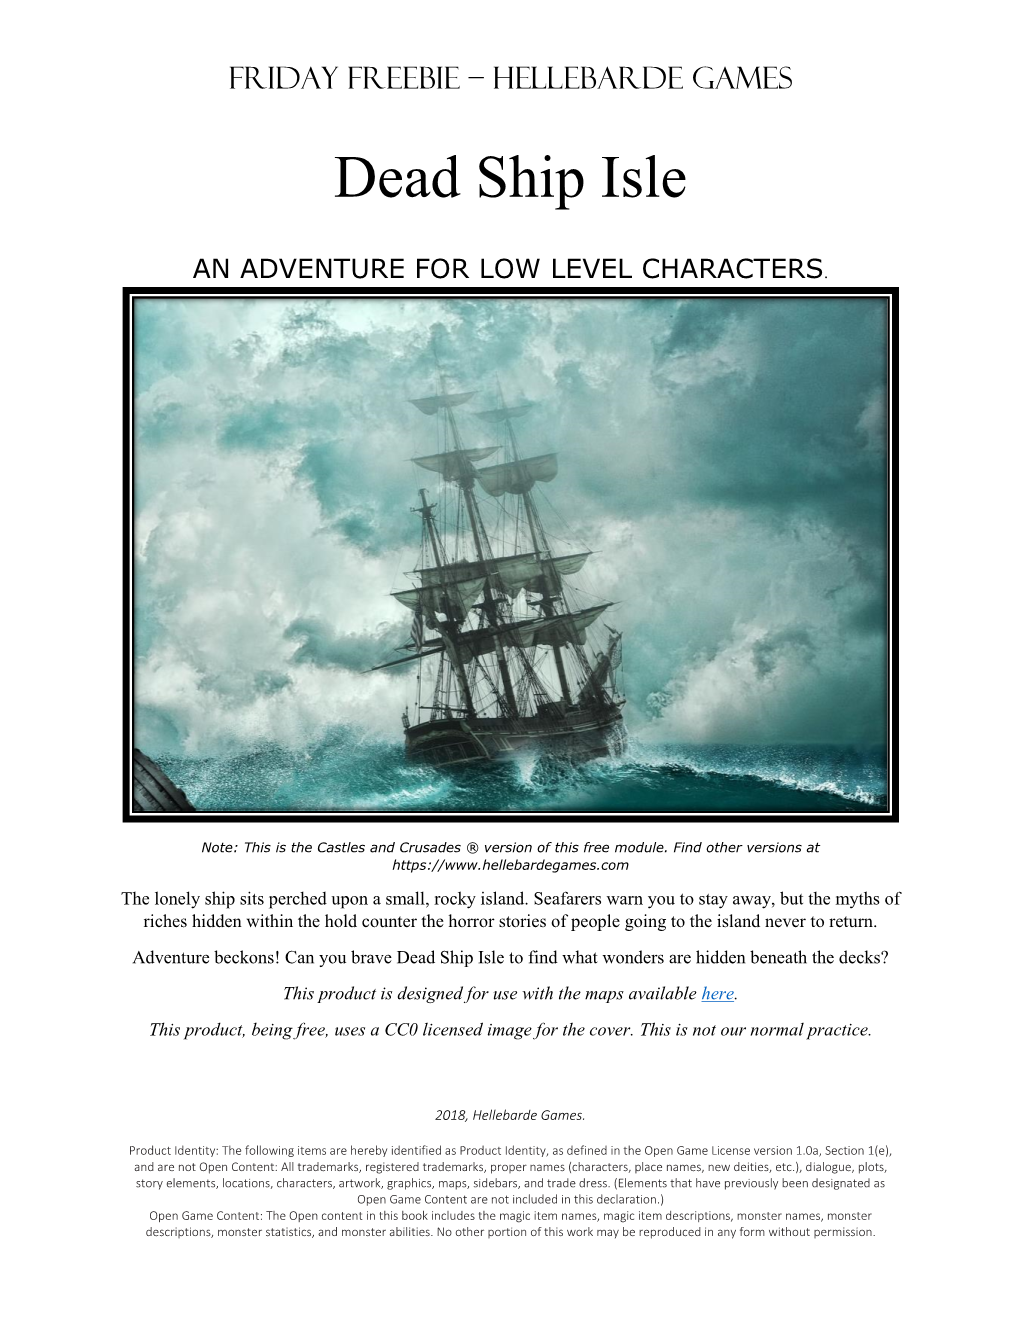 Dead Ship Isle